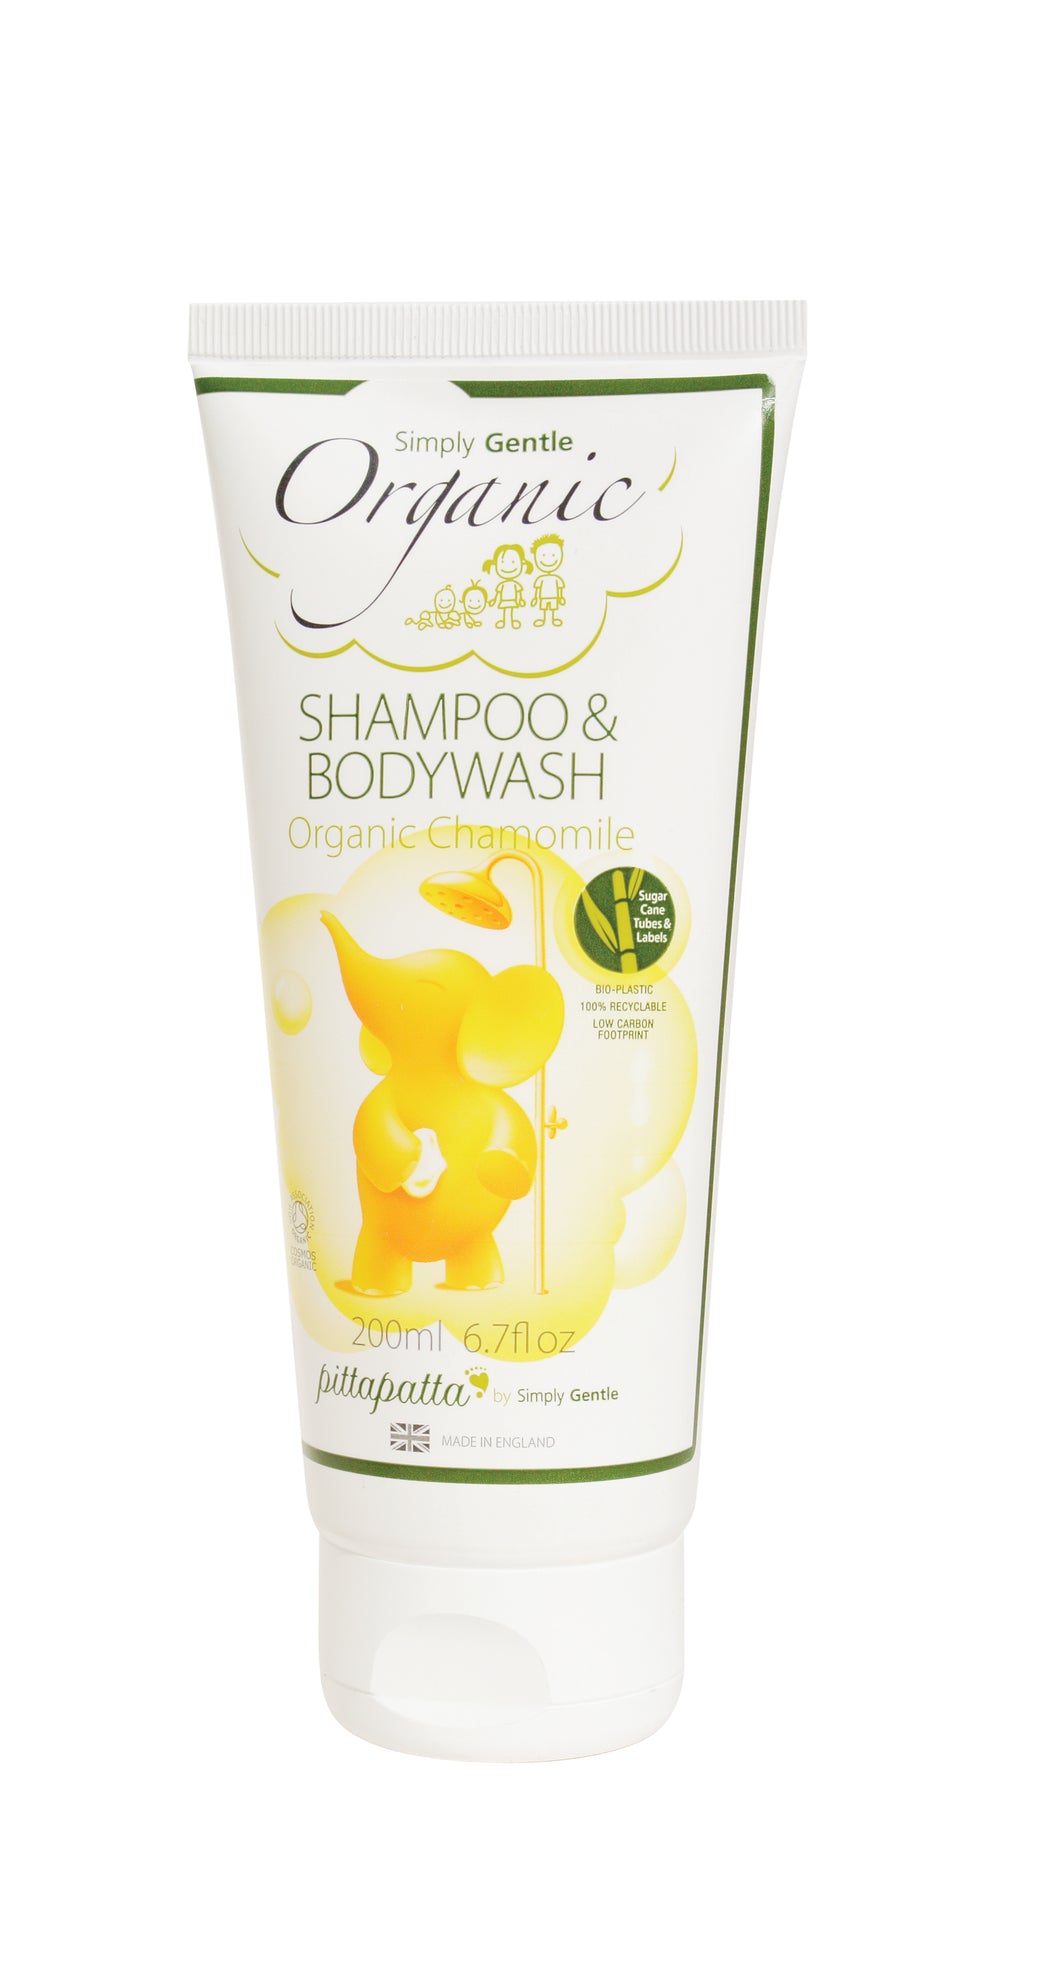 Pitta Patta Organic Shampoo & Body wash Chamomile